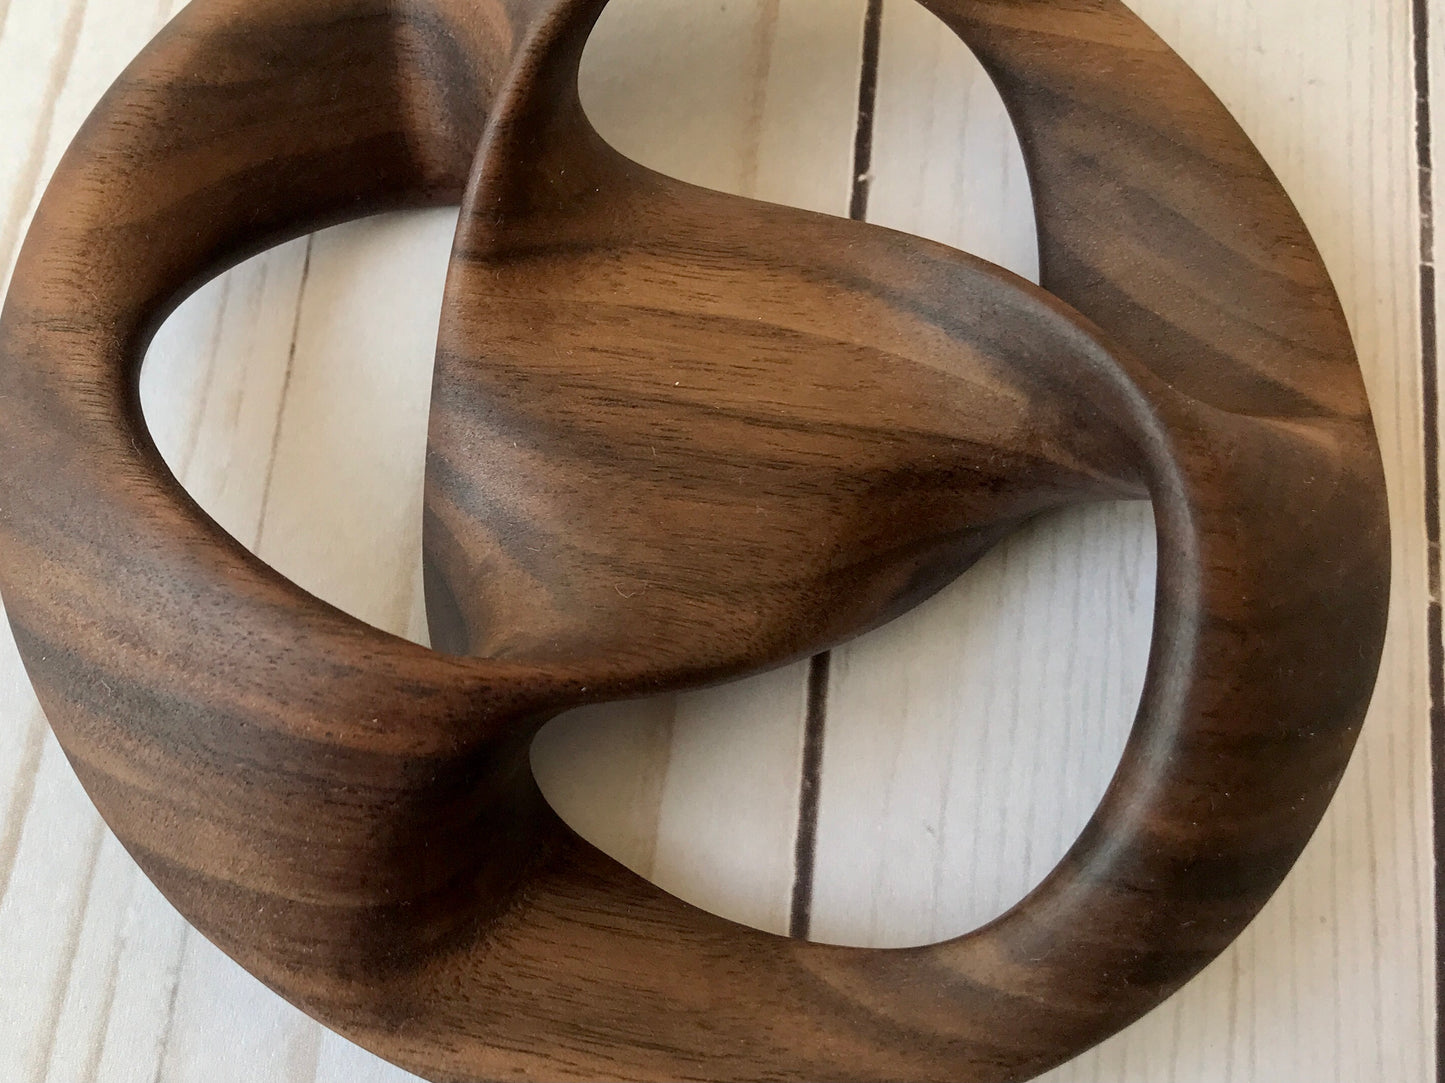 Triquetra Mobius Strip-like Wooden Sculpture, Walnut Wood, 5"